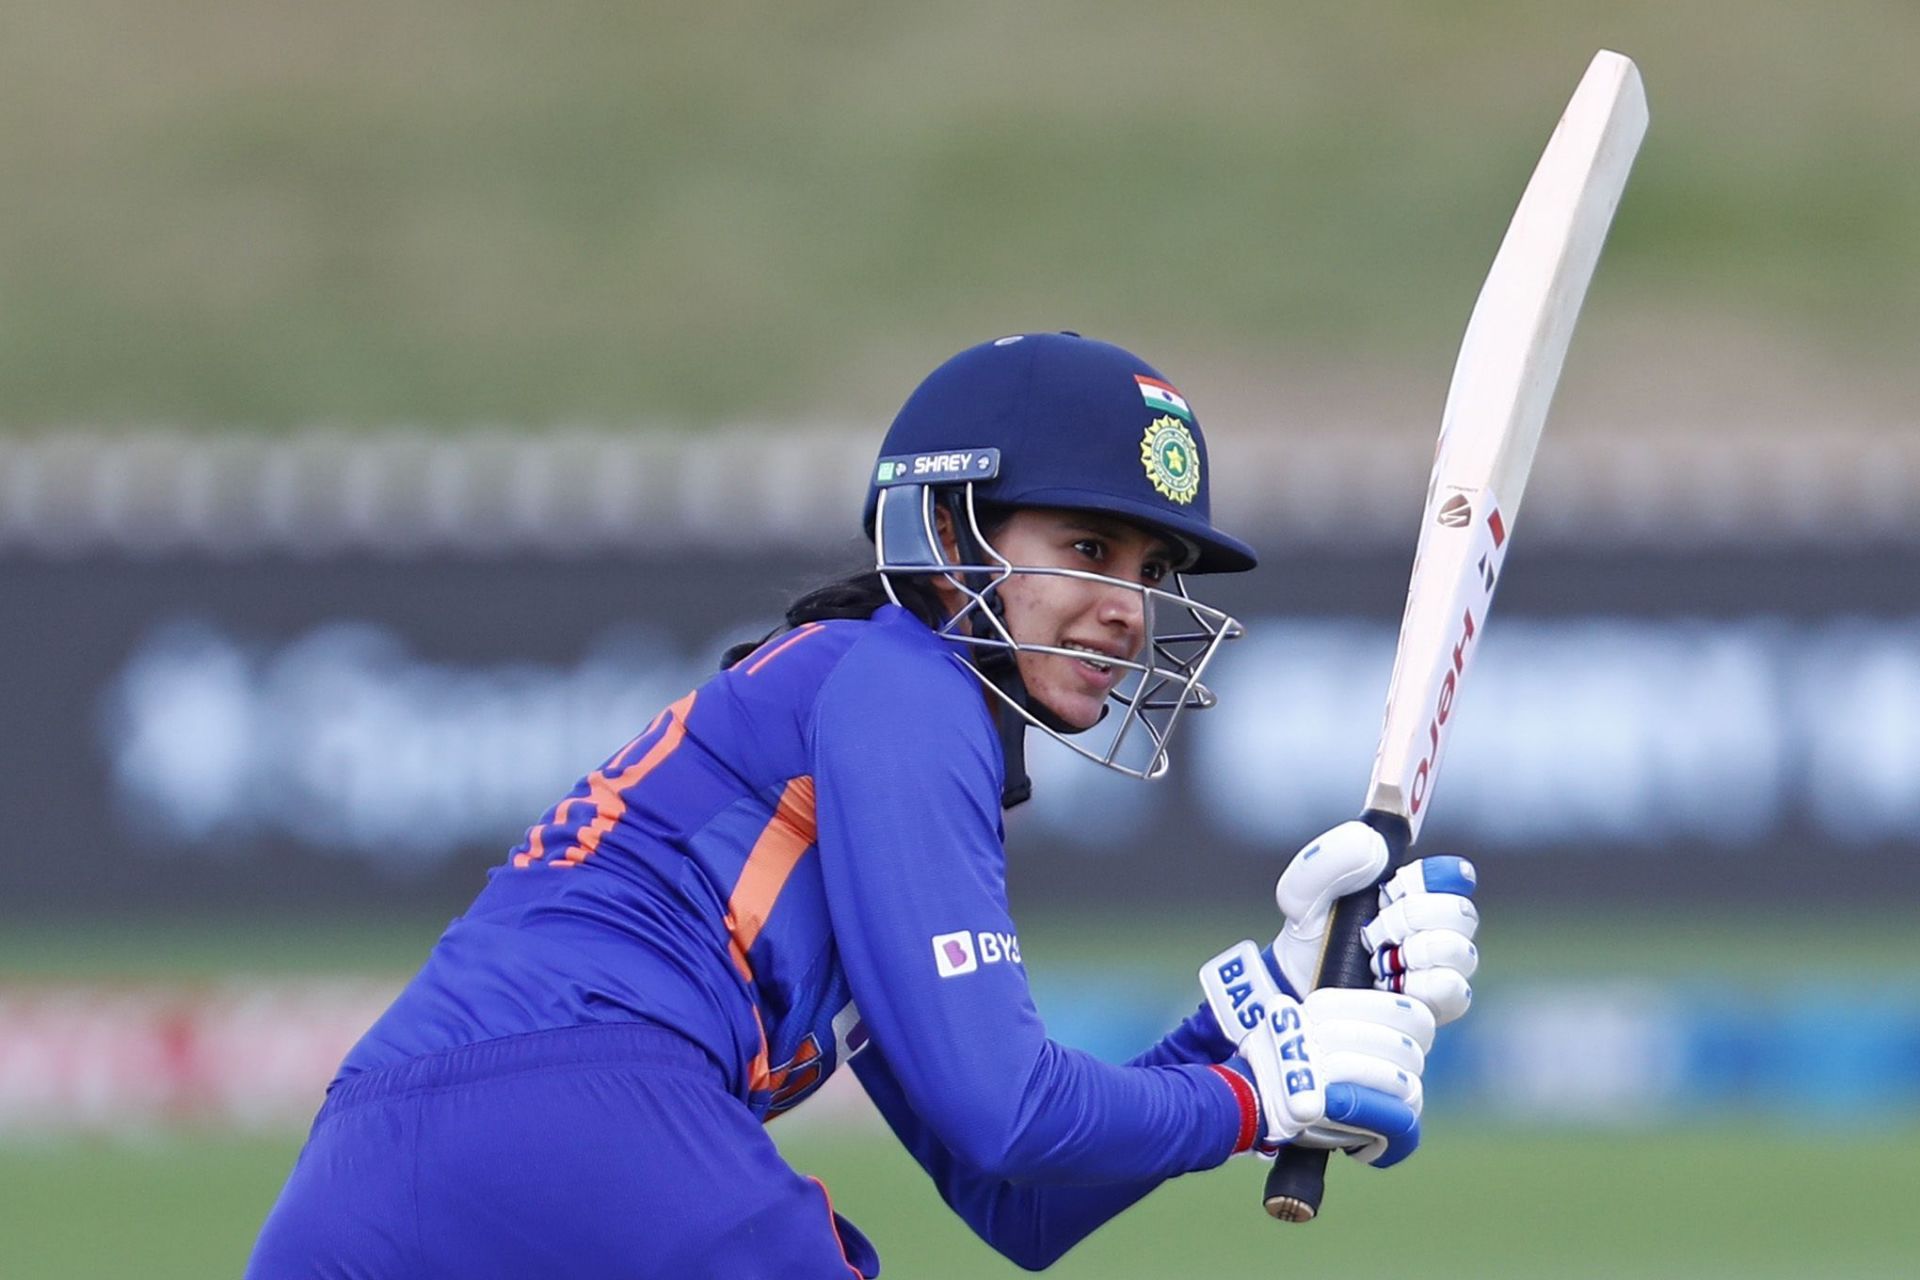 Smriti Mandhana will hope to give Team India a flying start